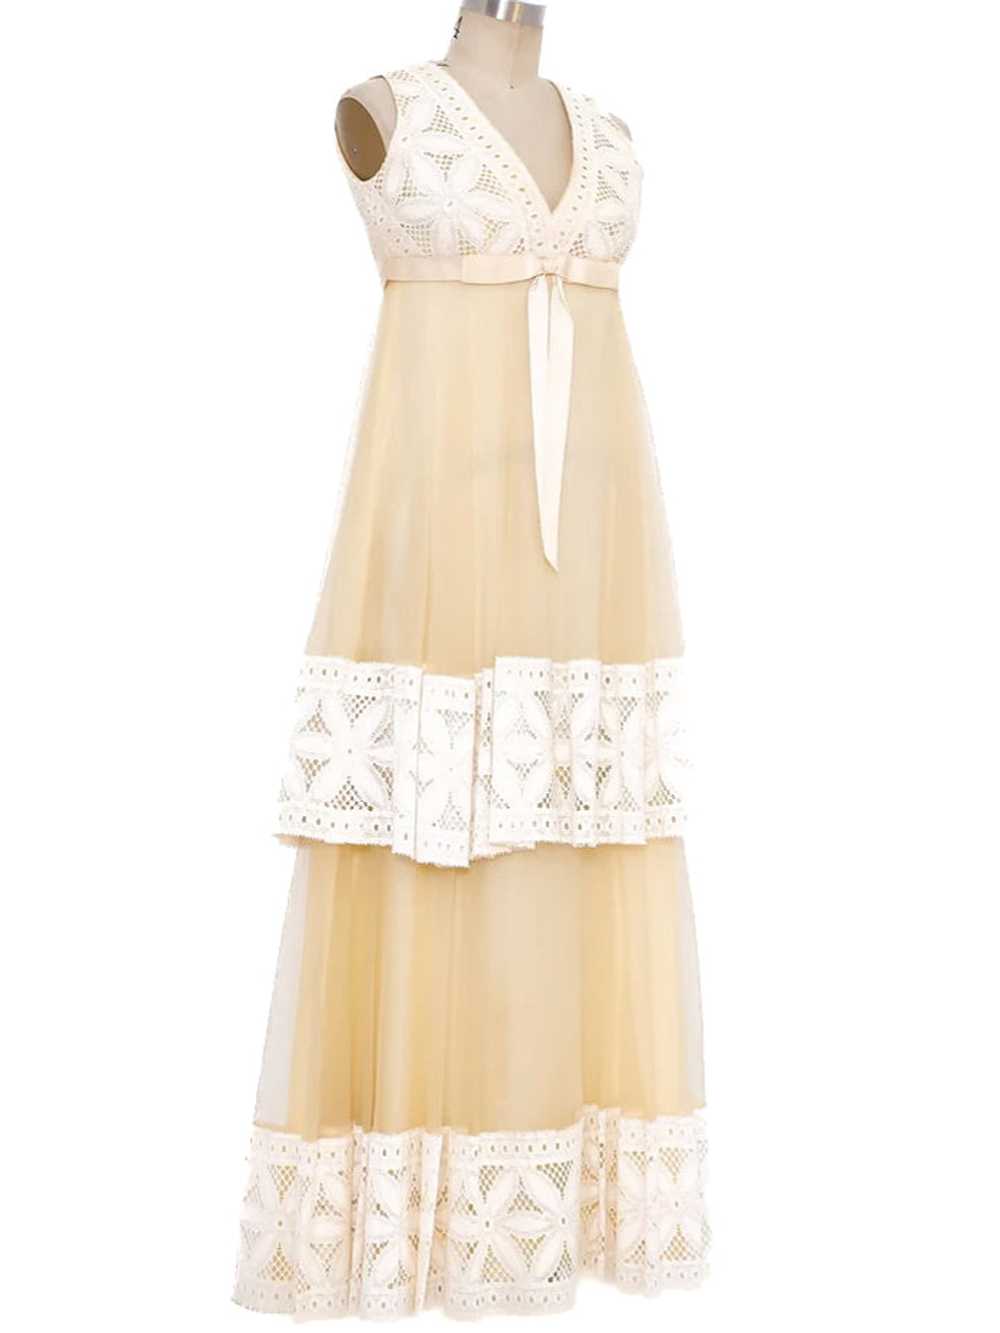 Jean Varon Lace Trimmed Chiffon Dress - image 3